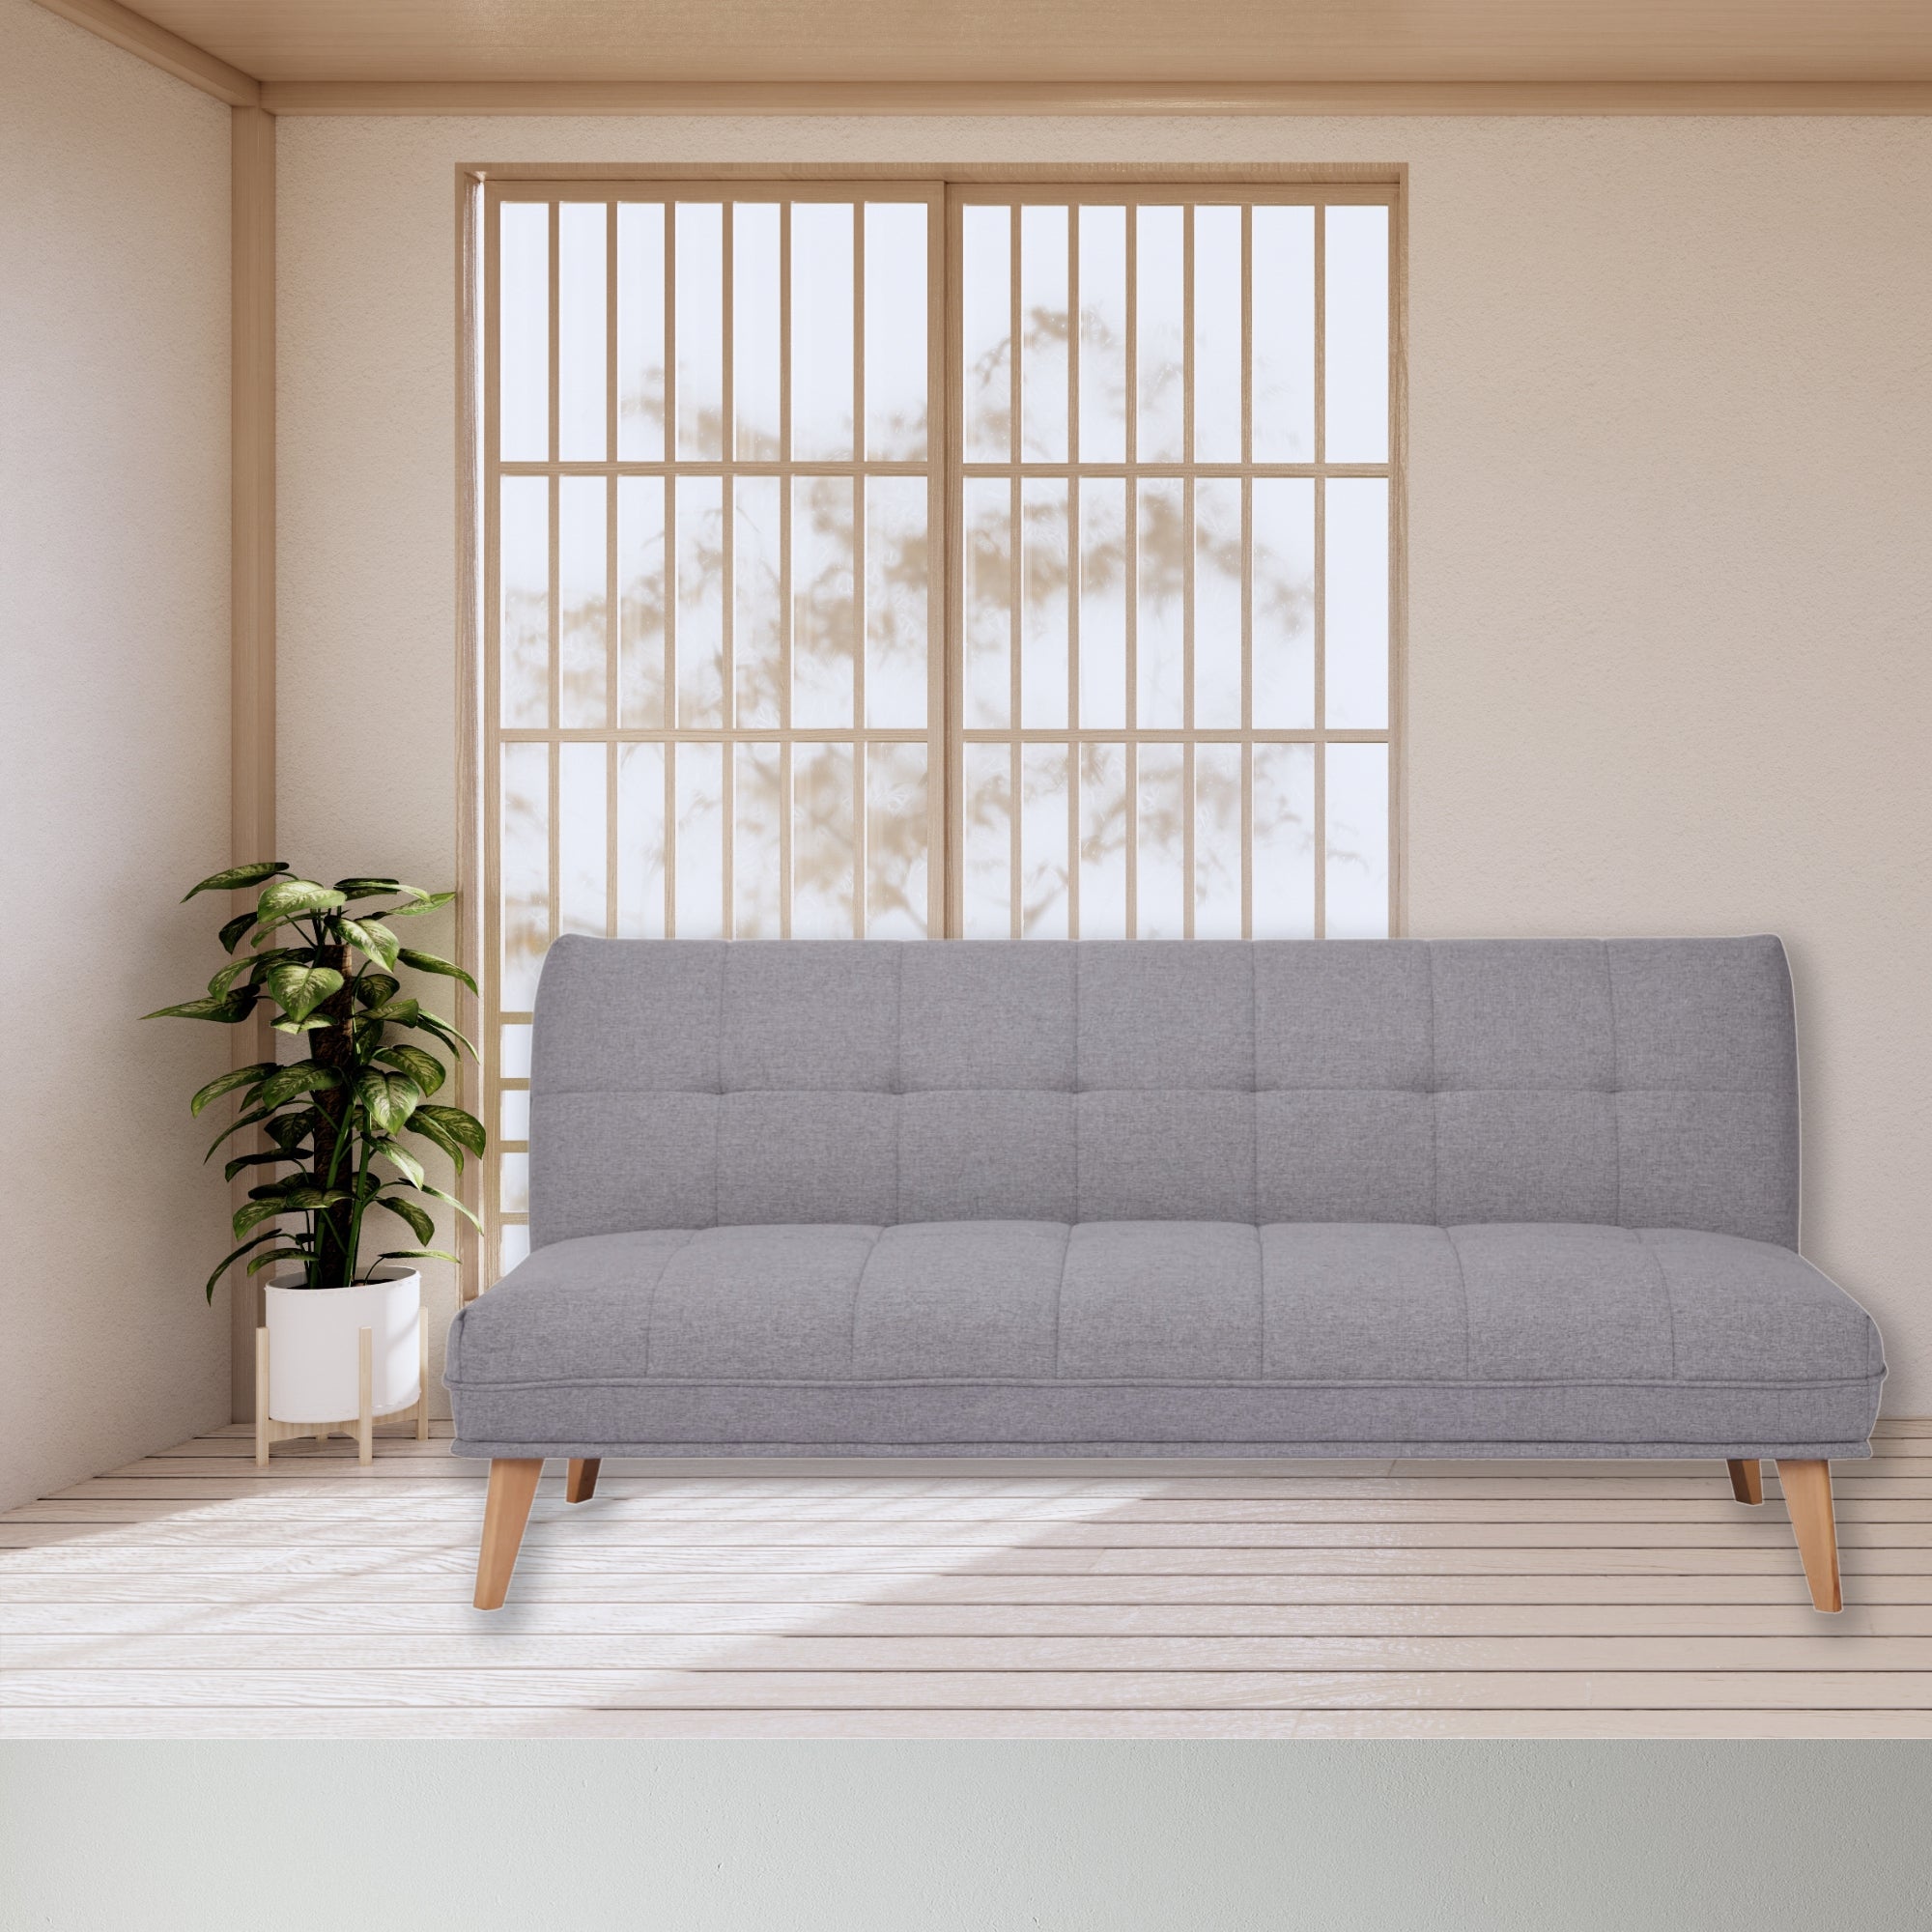 Light Grey 3-Seater Sofa Bed, Plush Upholstery, Pine Frame